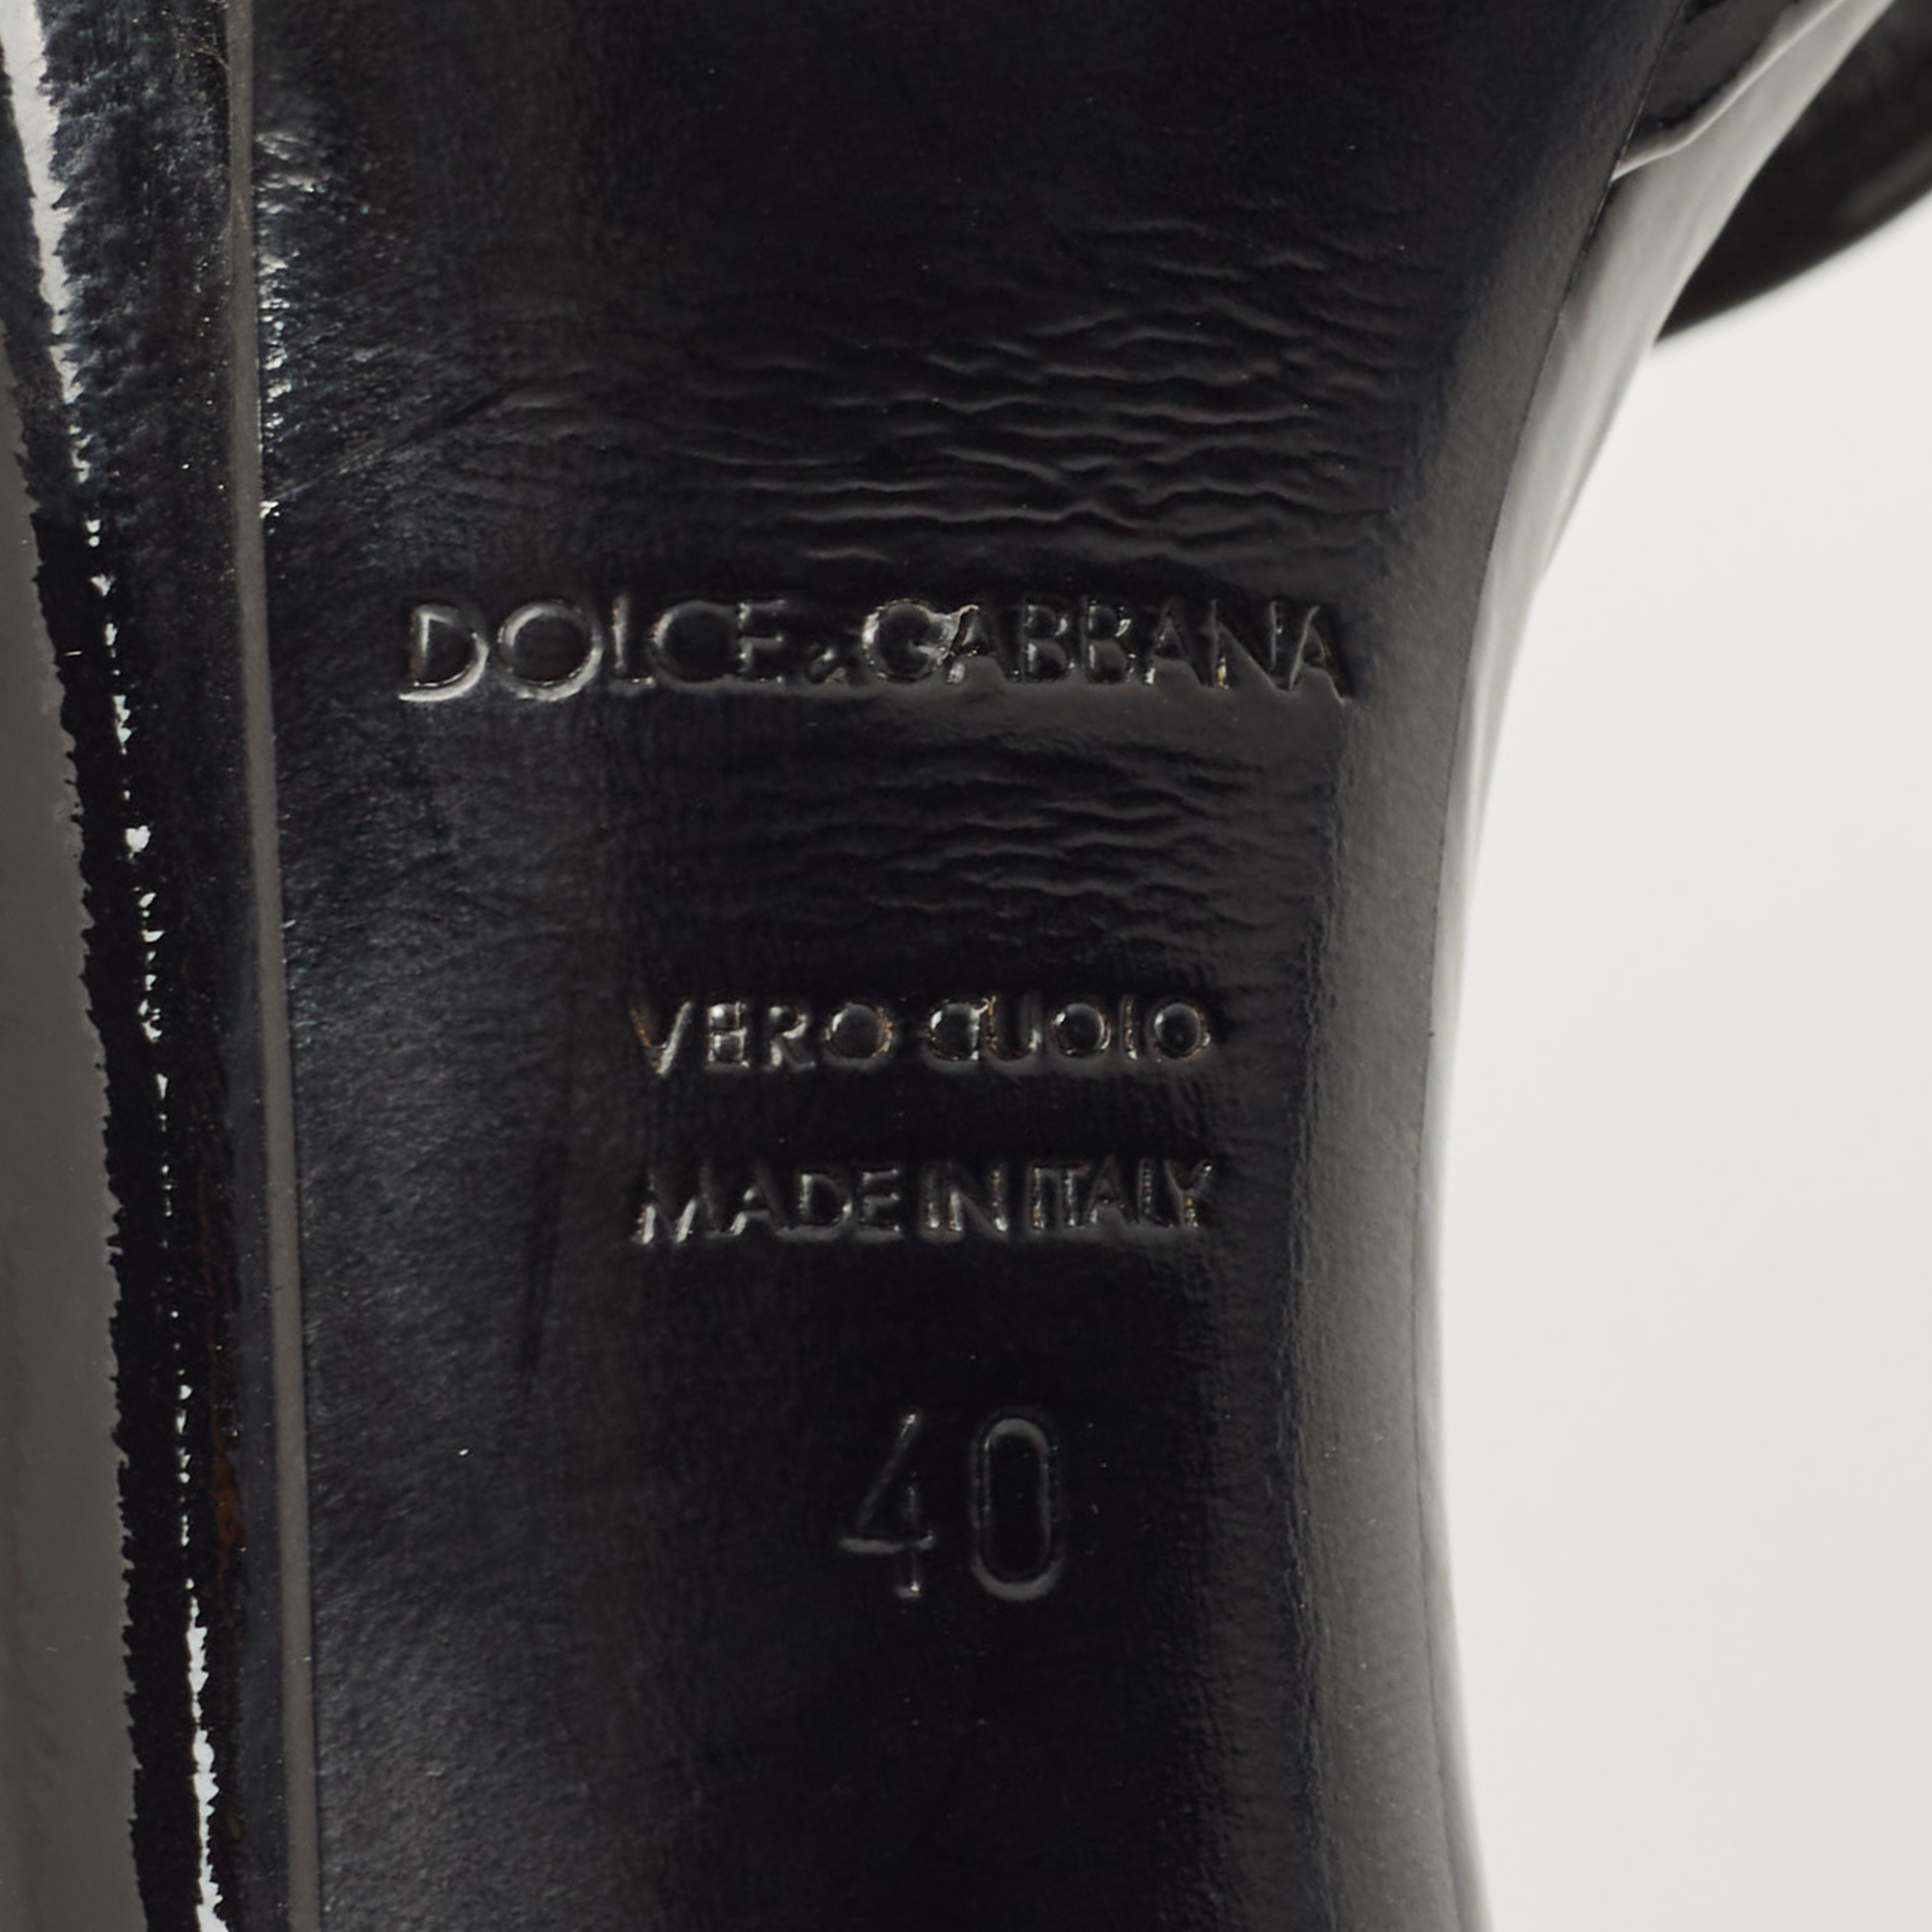 Dolce & Gabbana Black/Red Leopard Print Calf Hair Ankle Strap Sandals Size 40